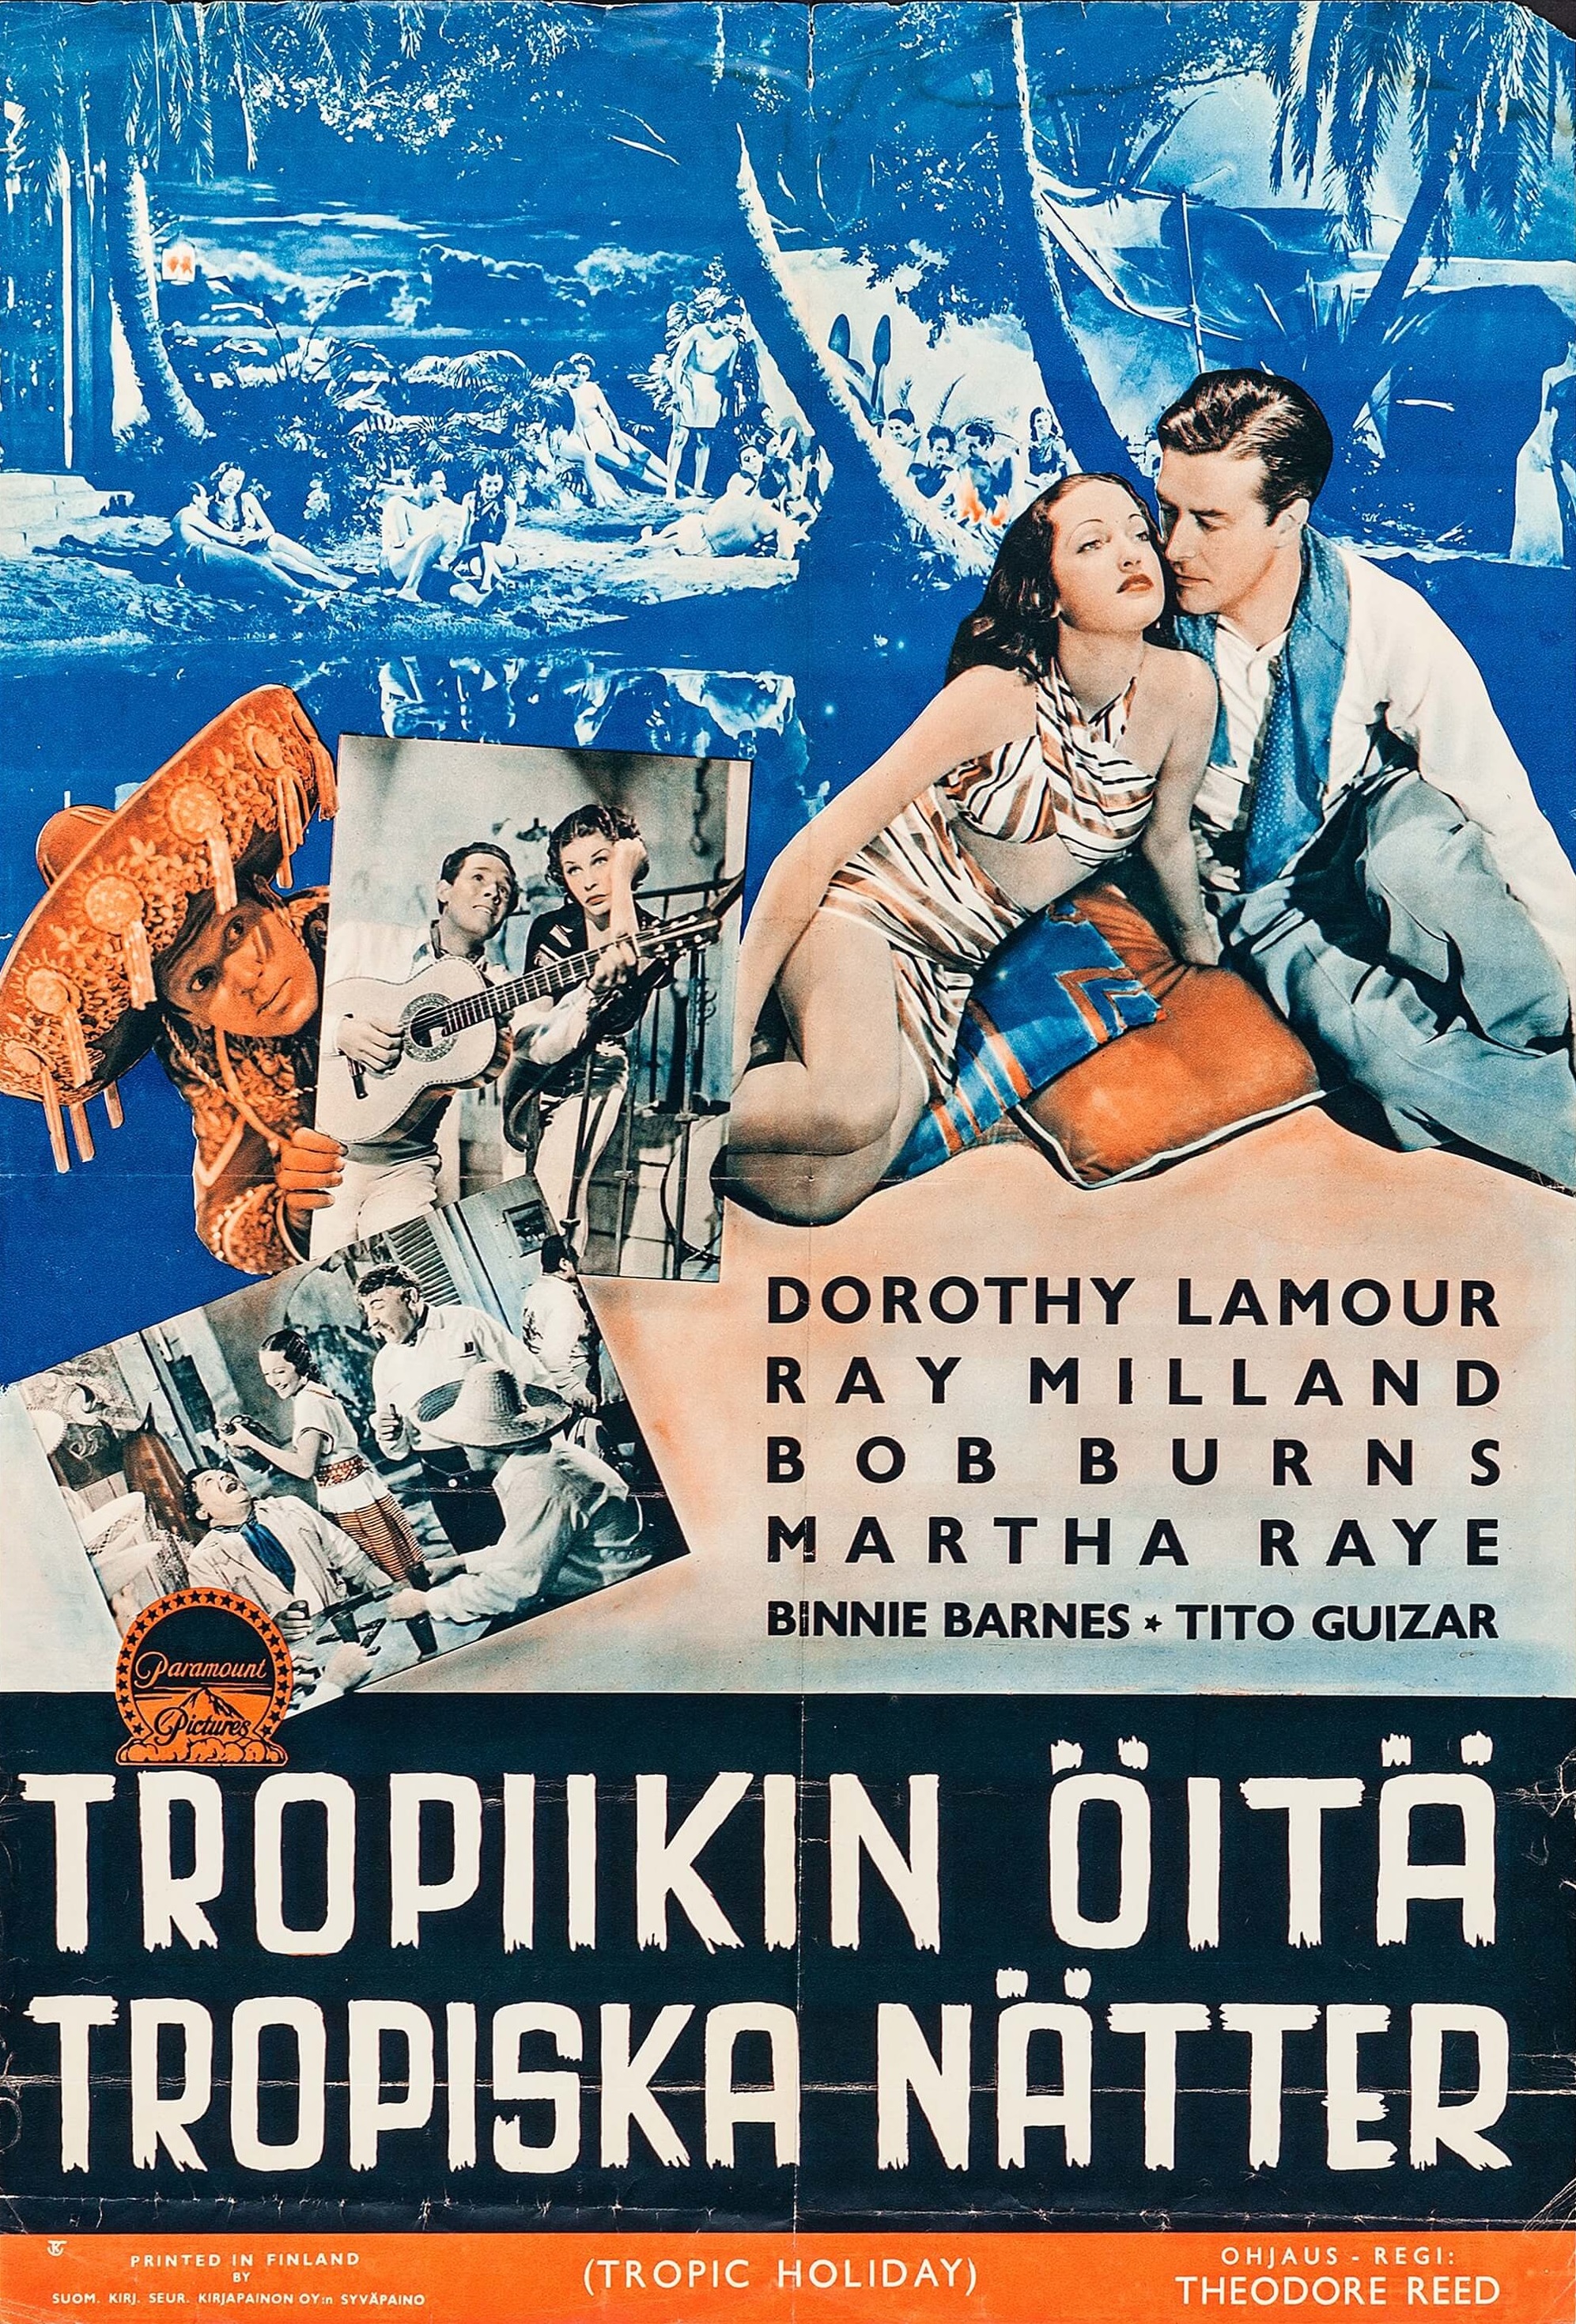 Tropic Holiday (1938) Screenshot 1 